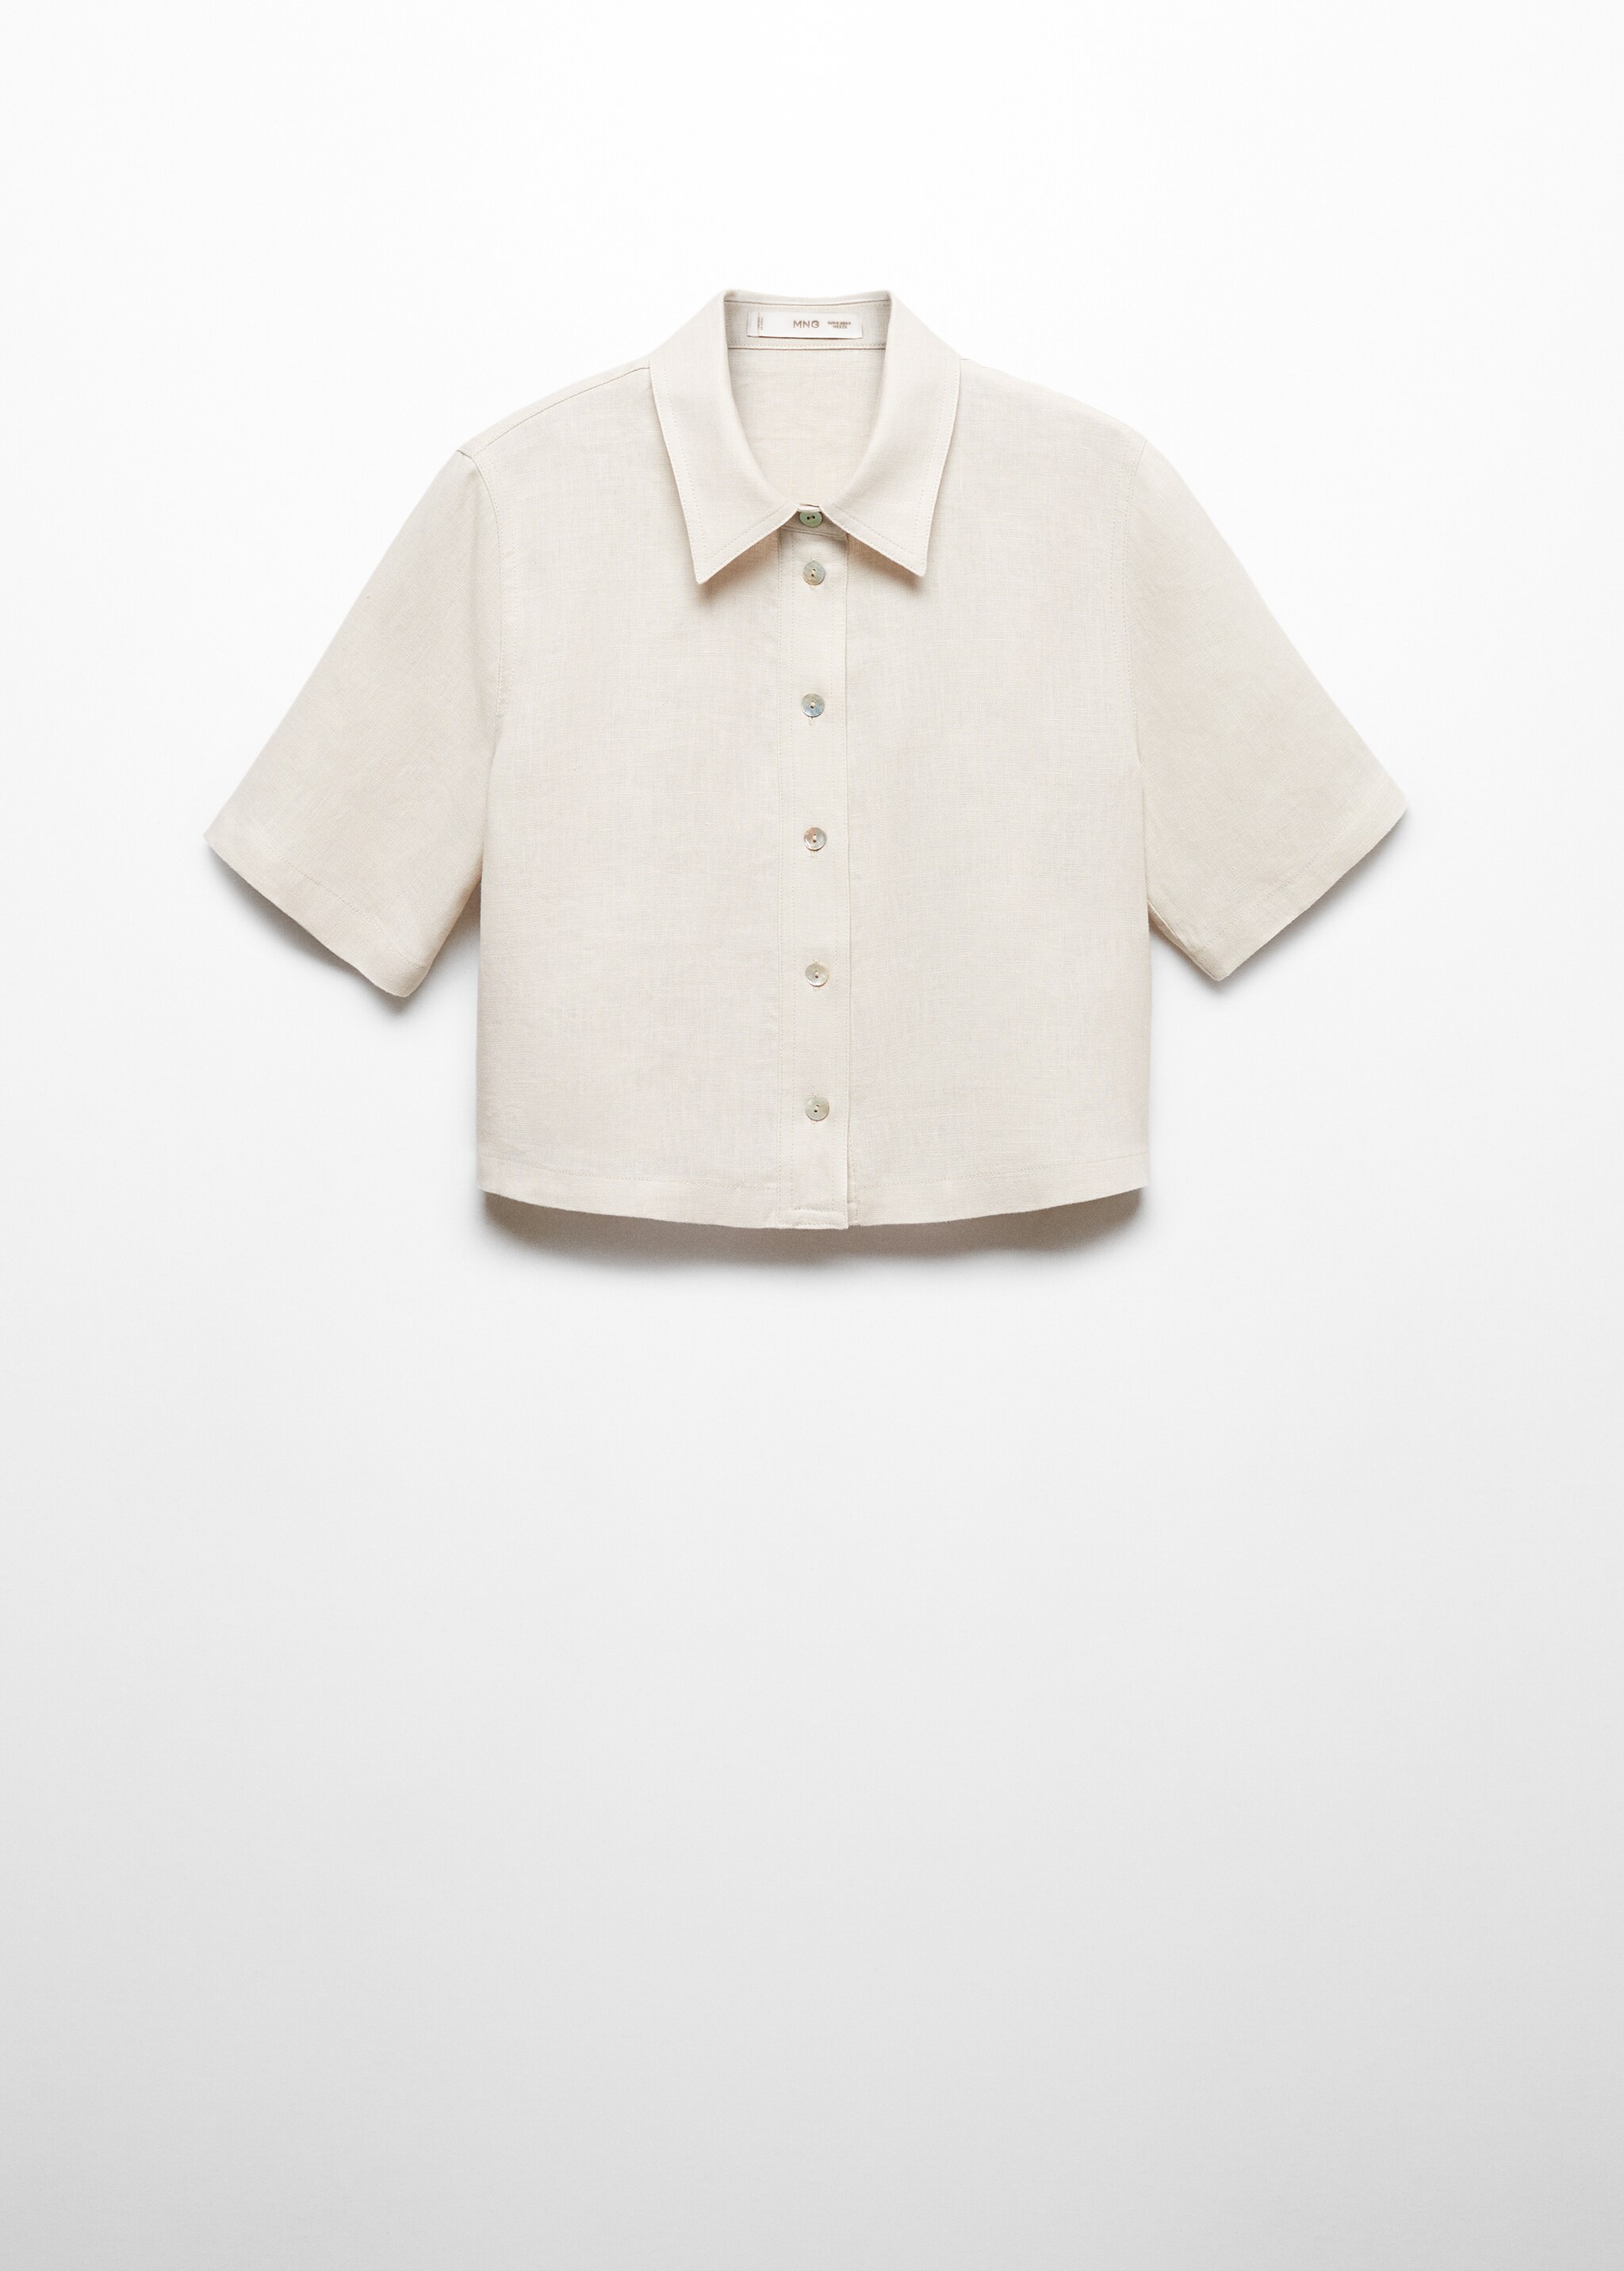 Camisa manga corta lino - Artículo sin modelo